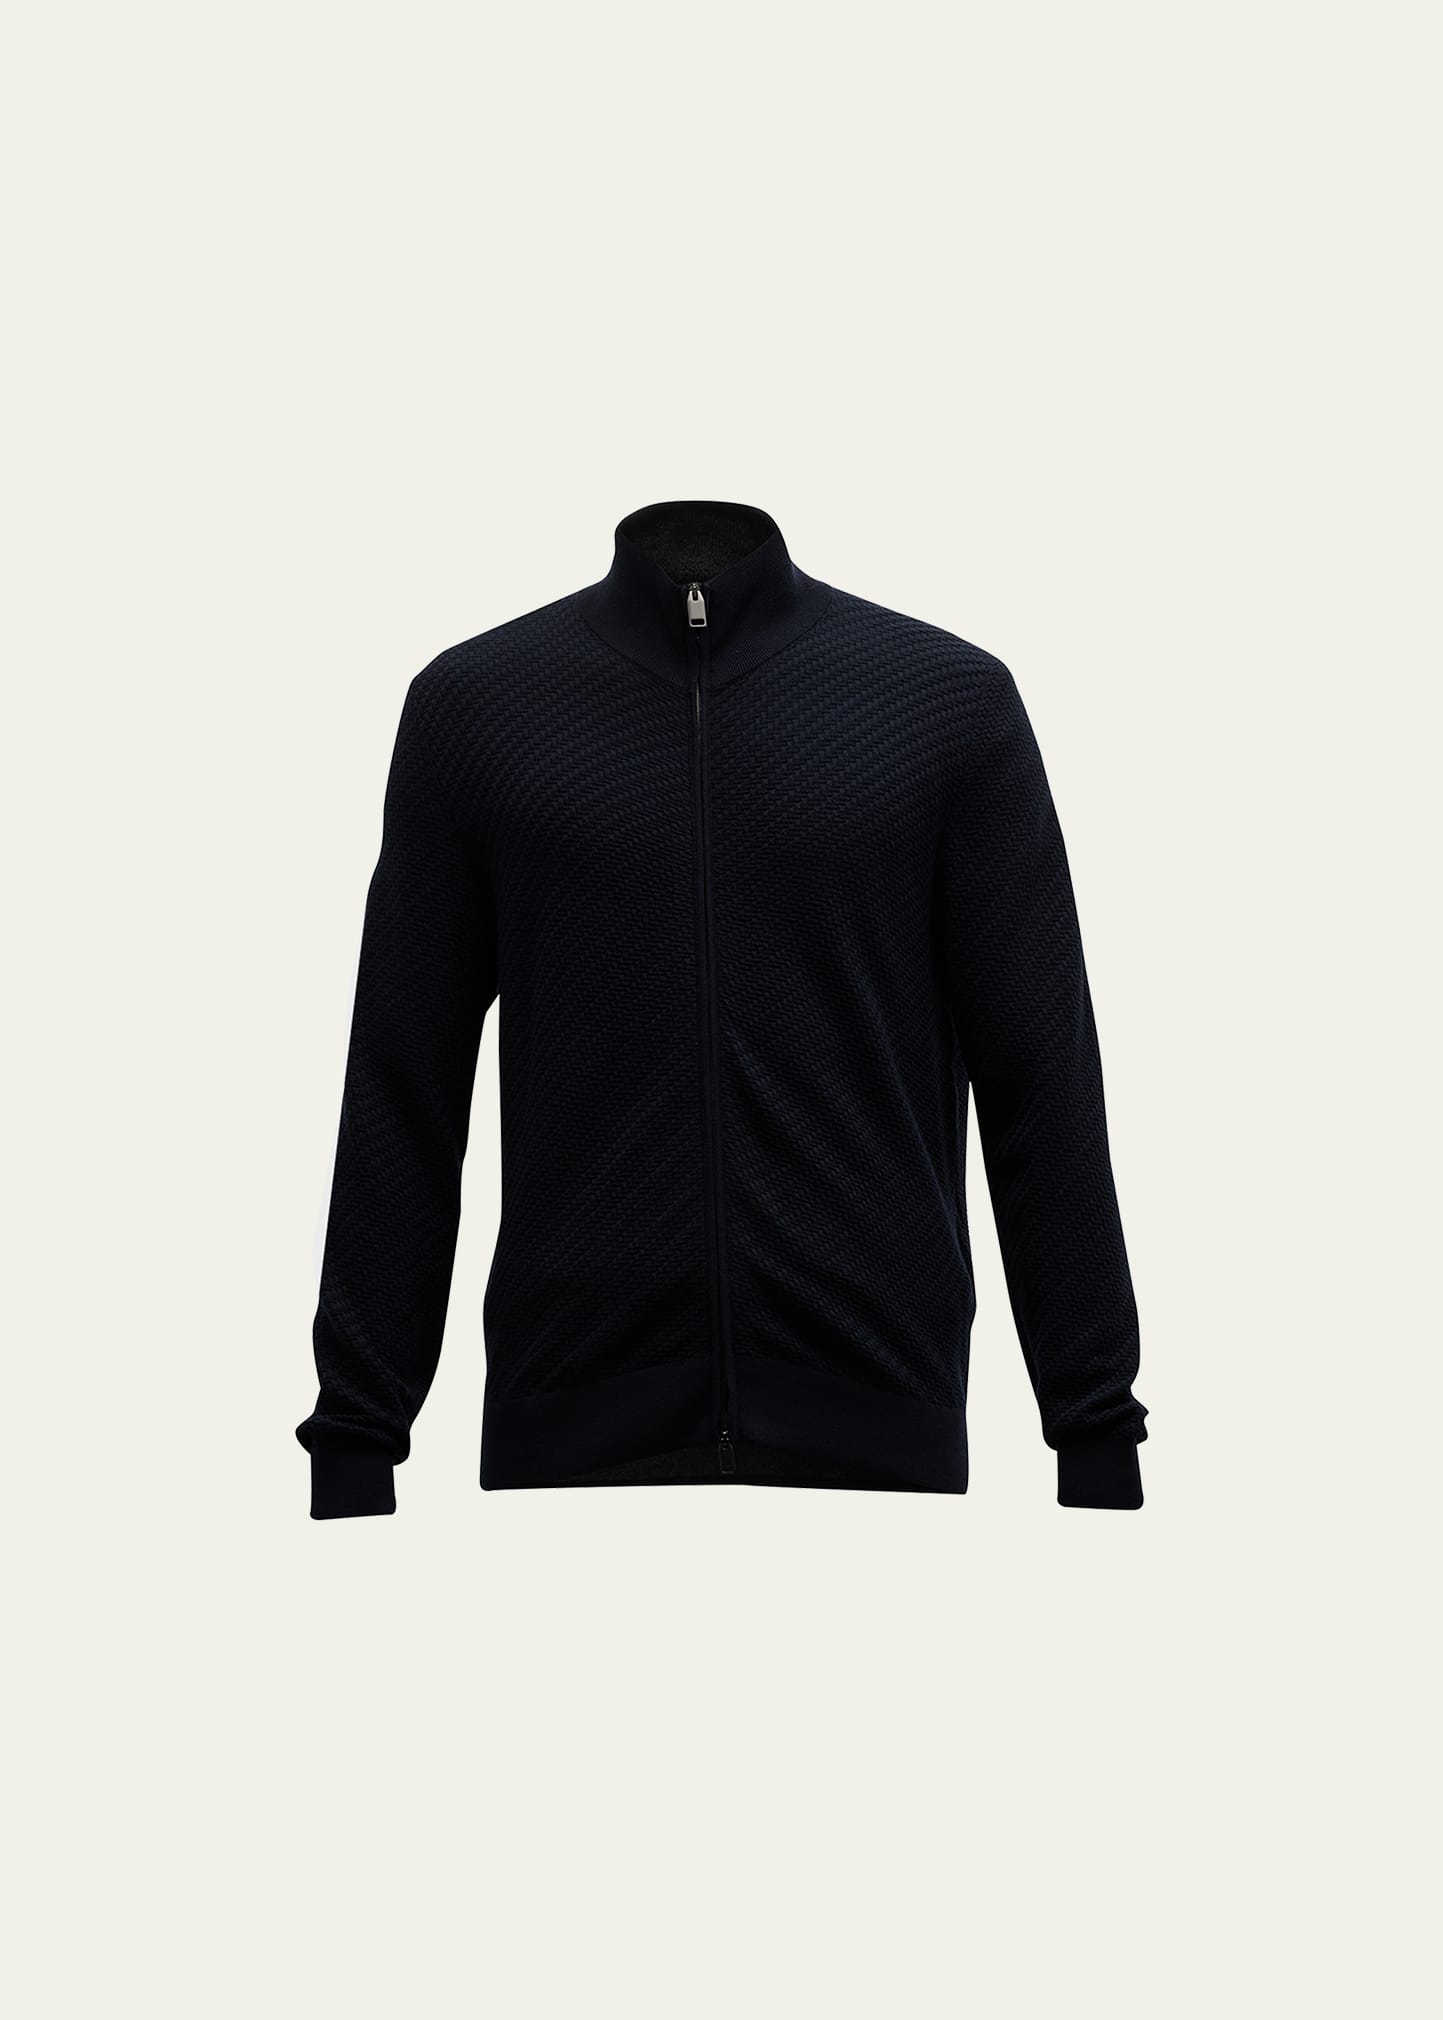 Brioni Men's Wool-Cashmere Full-Zip Sweater